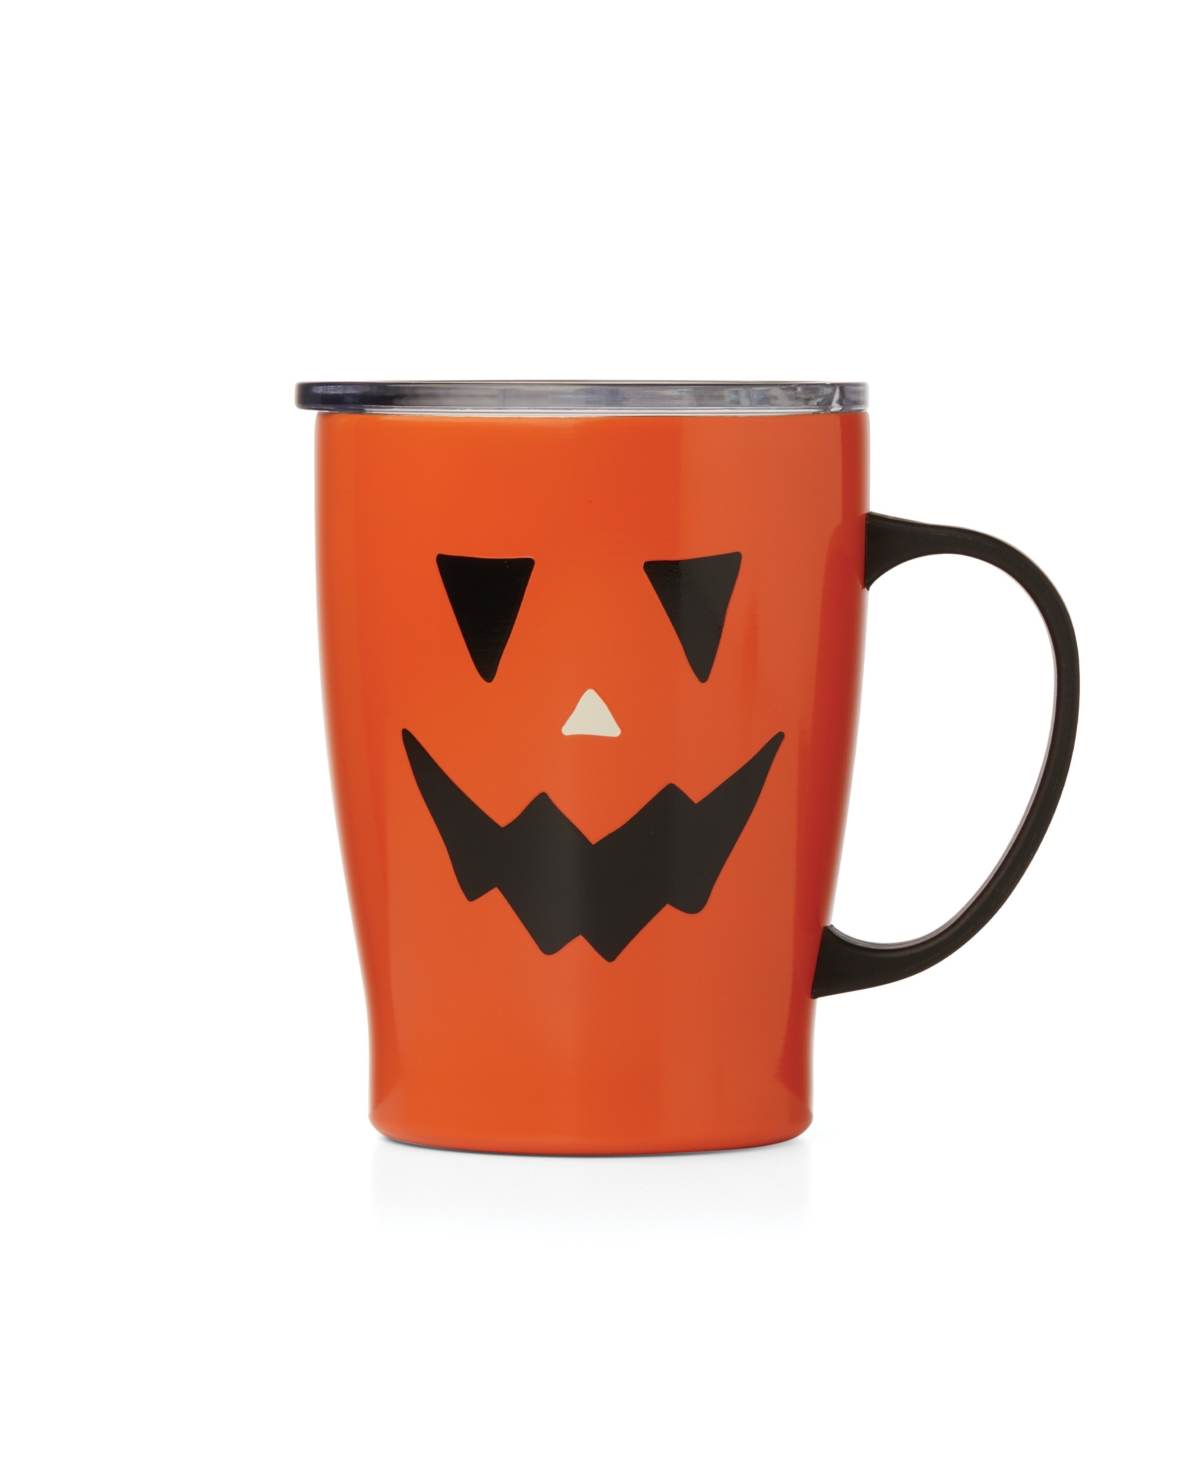 Cambridge Jack-o-lantern Insulated Coffee Mug, 20 oz In Orange